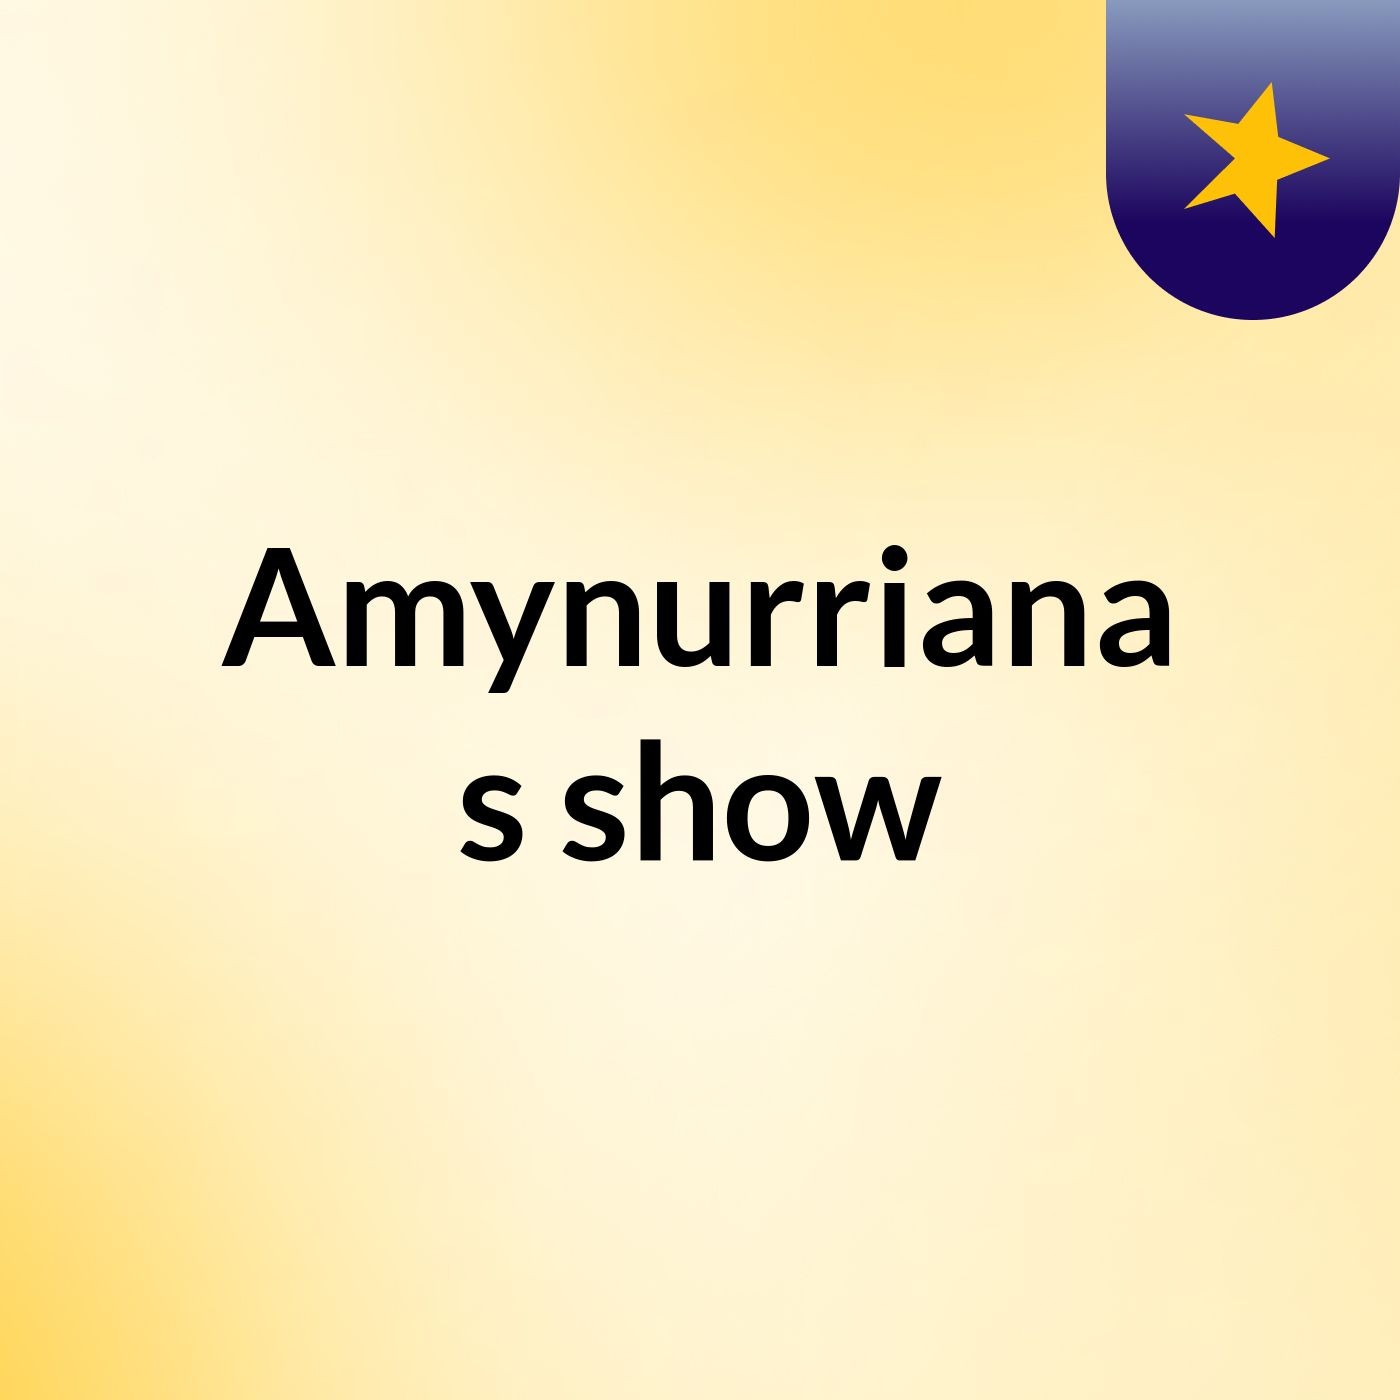 Amynurriana's show